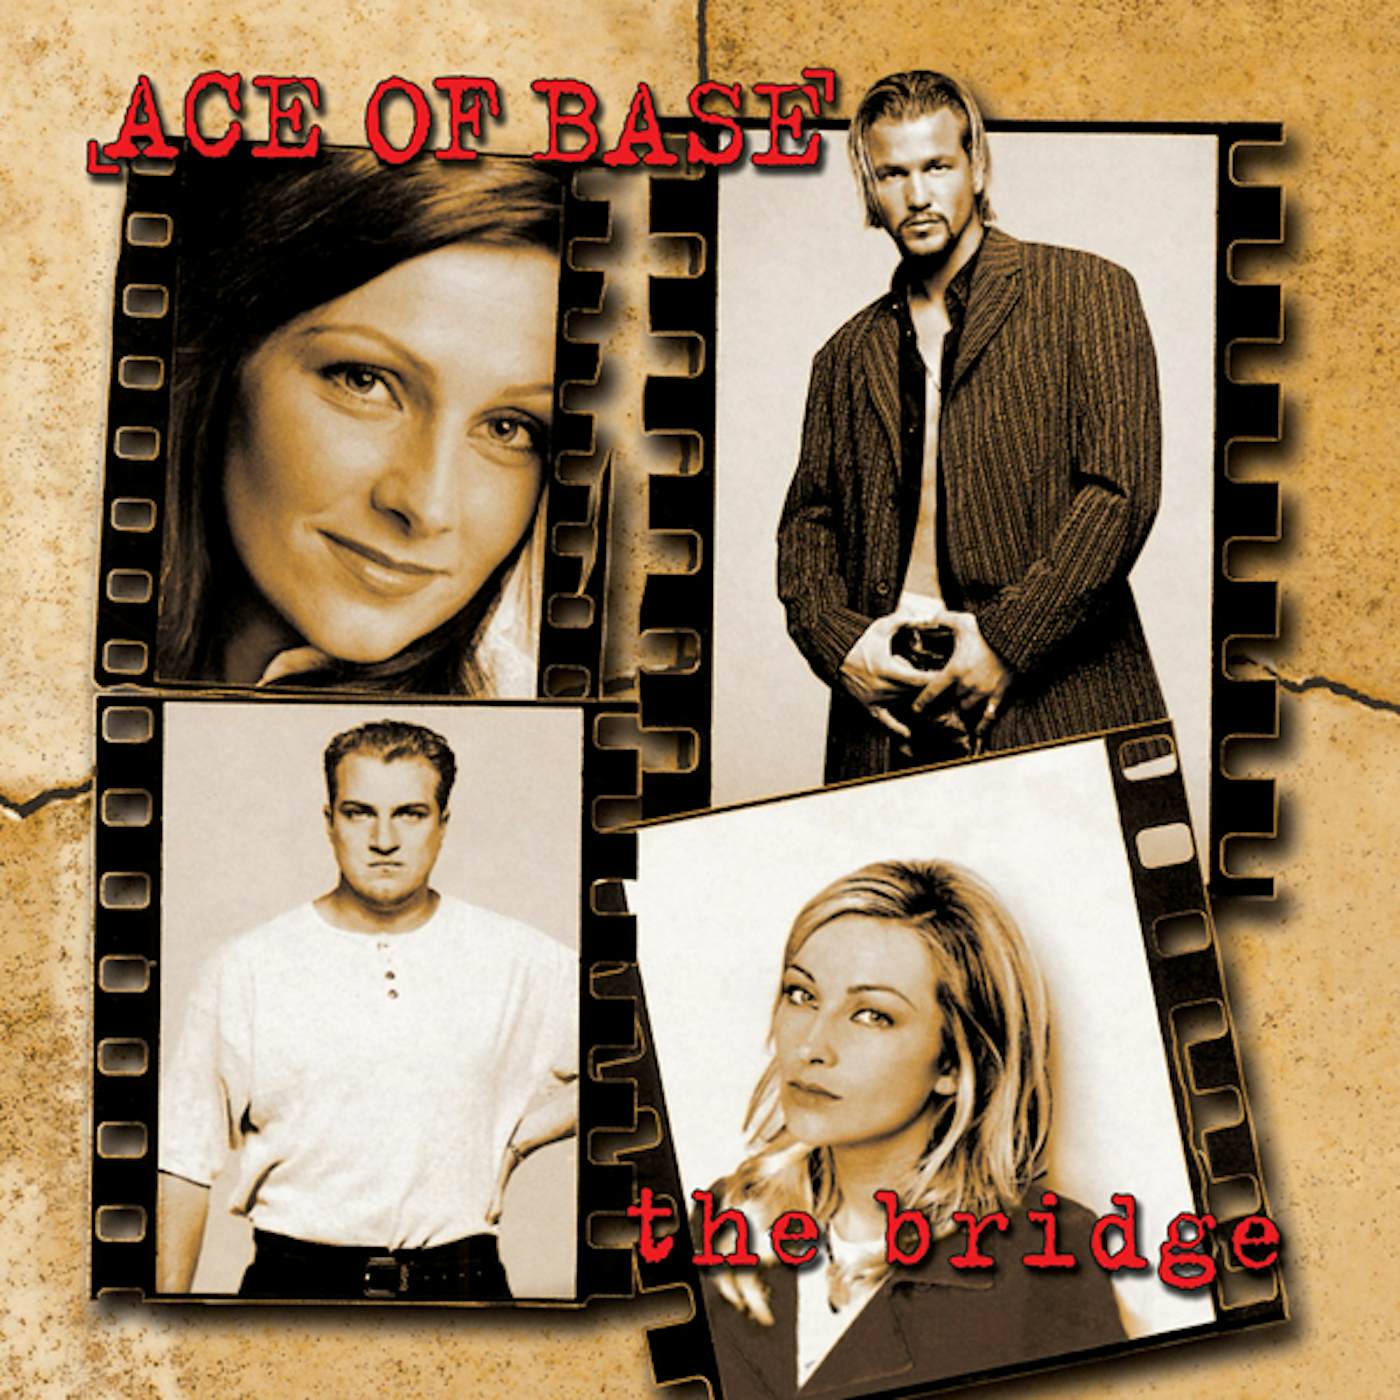 Ace of Base BRIDGE Vinyl Record